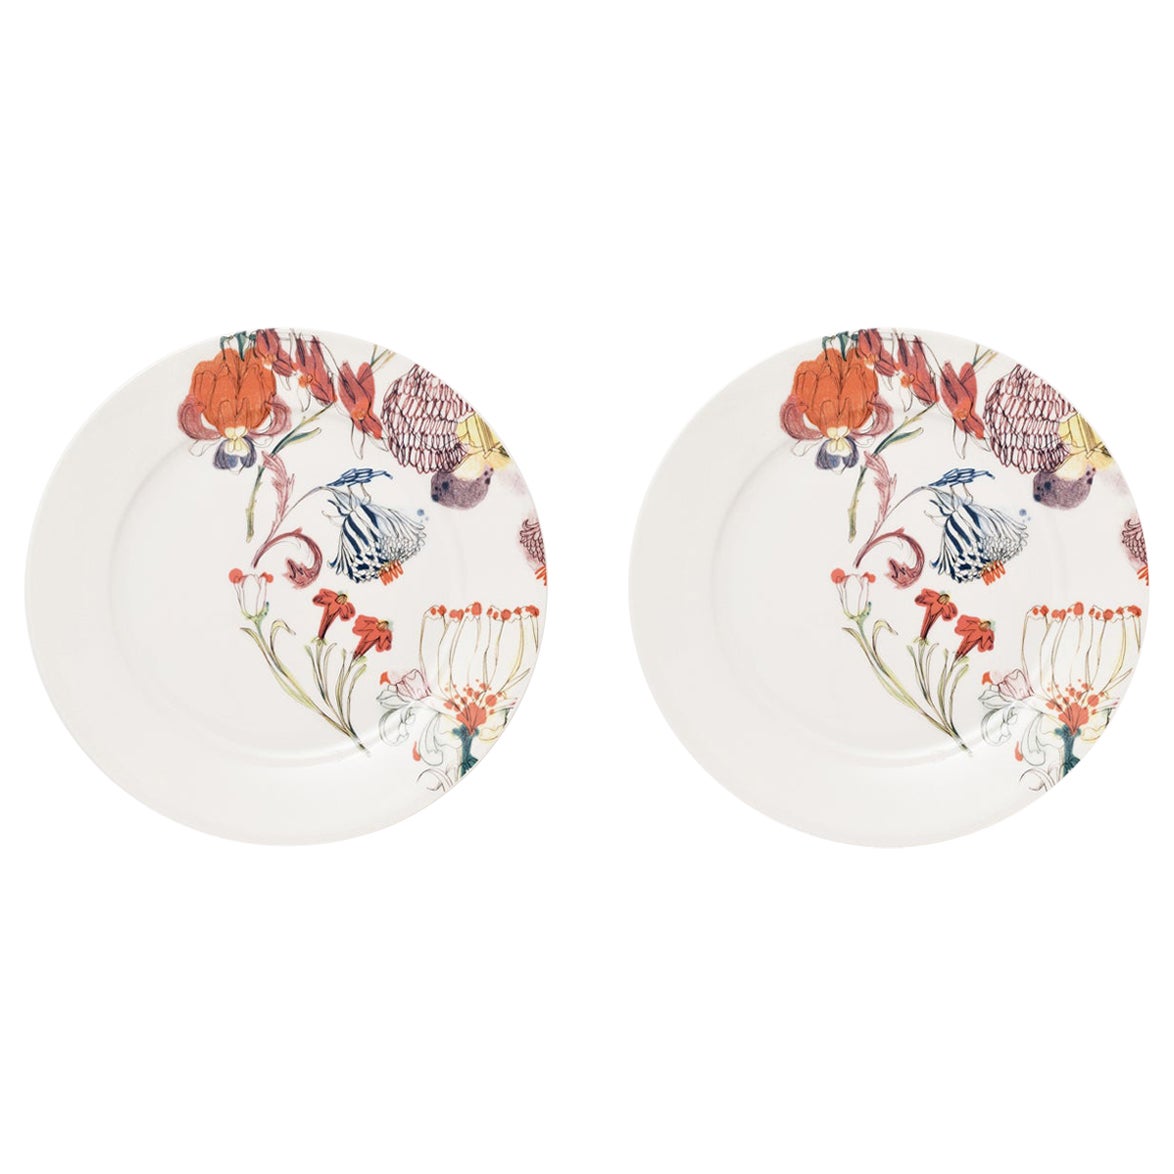 Grandma's Garden, Contemporary Porcelain Dinner Plates Set with Floral Design For Sale